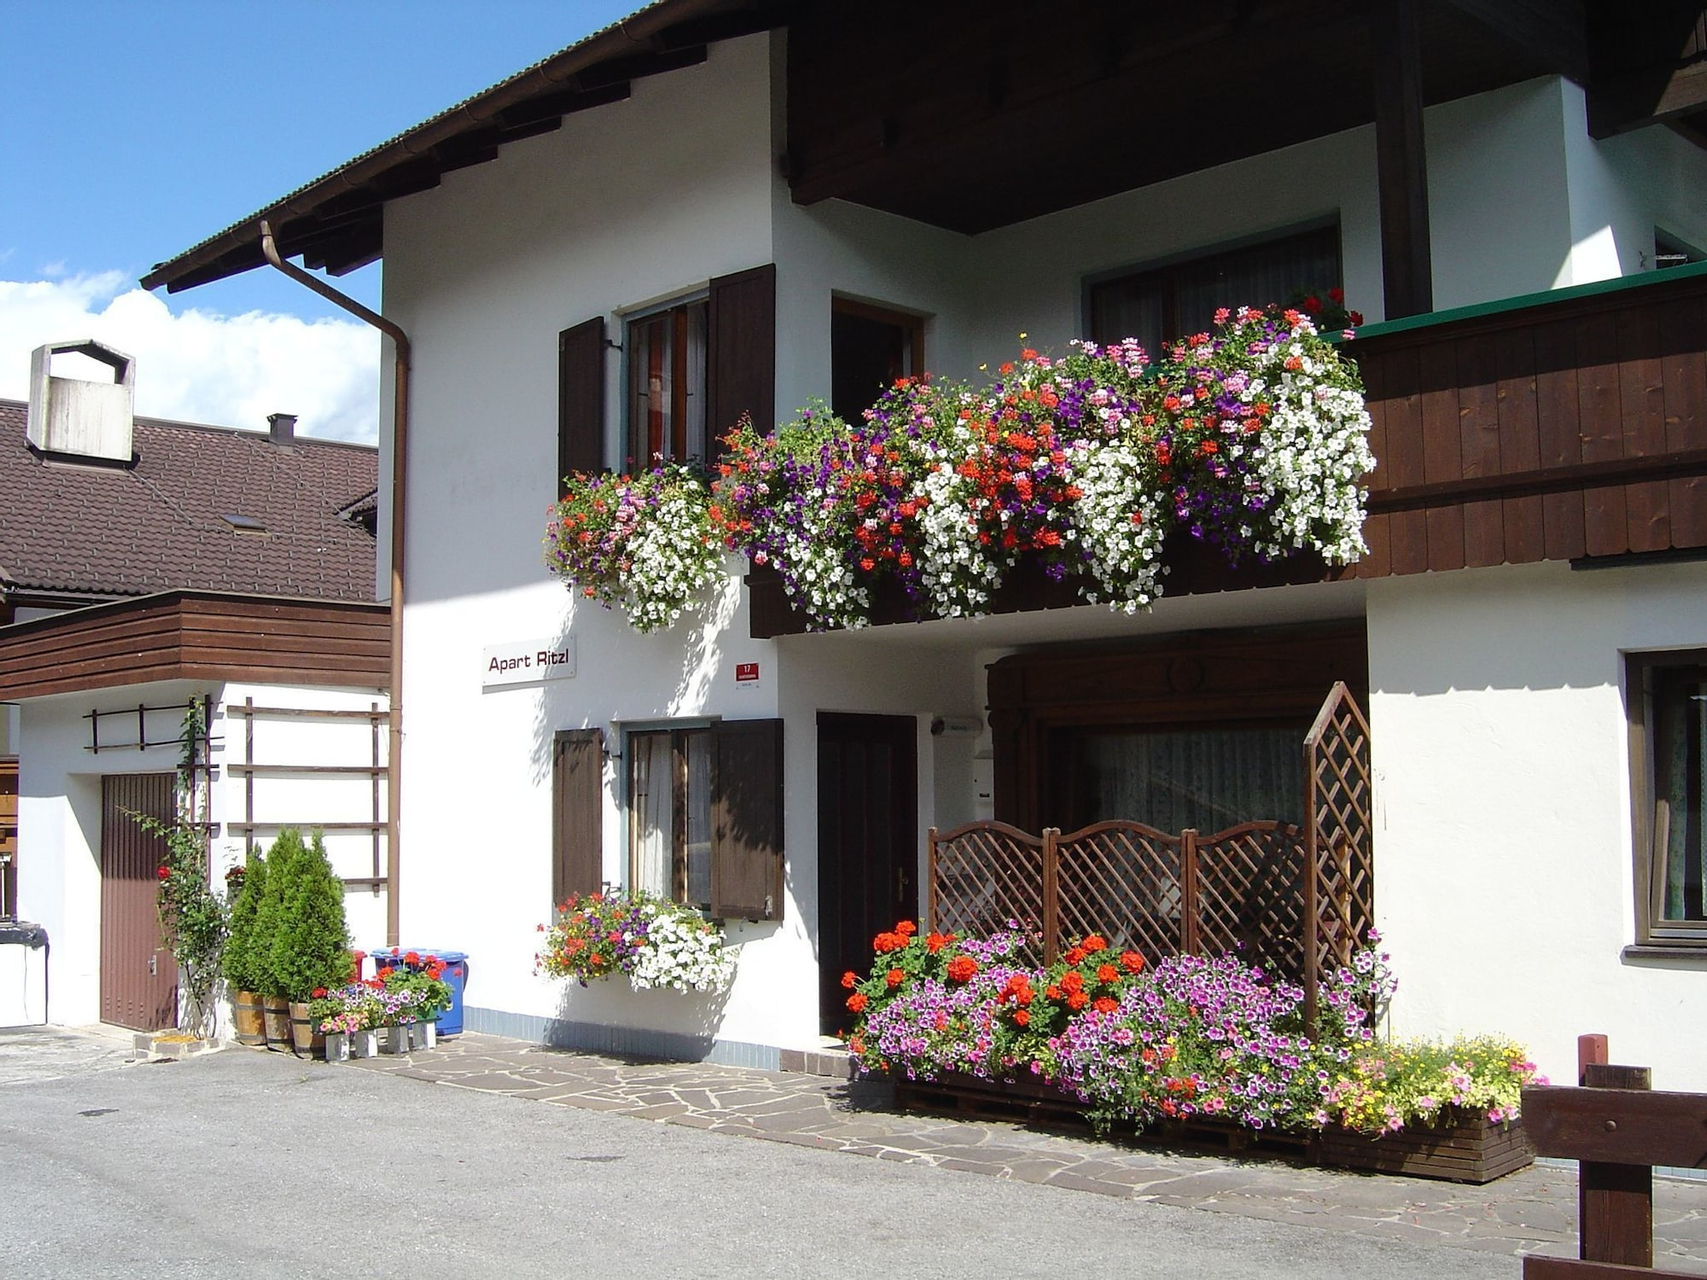 Exterior & Views, Apart Ritzl, Schwaz